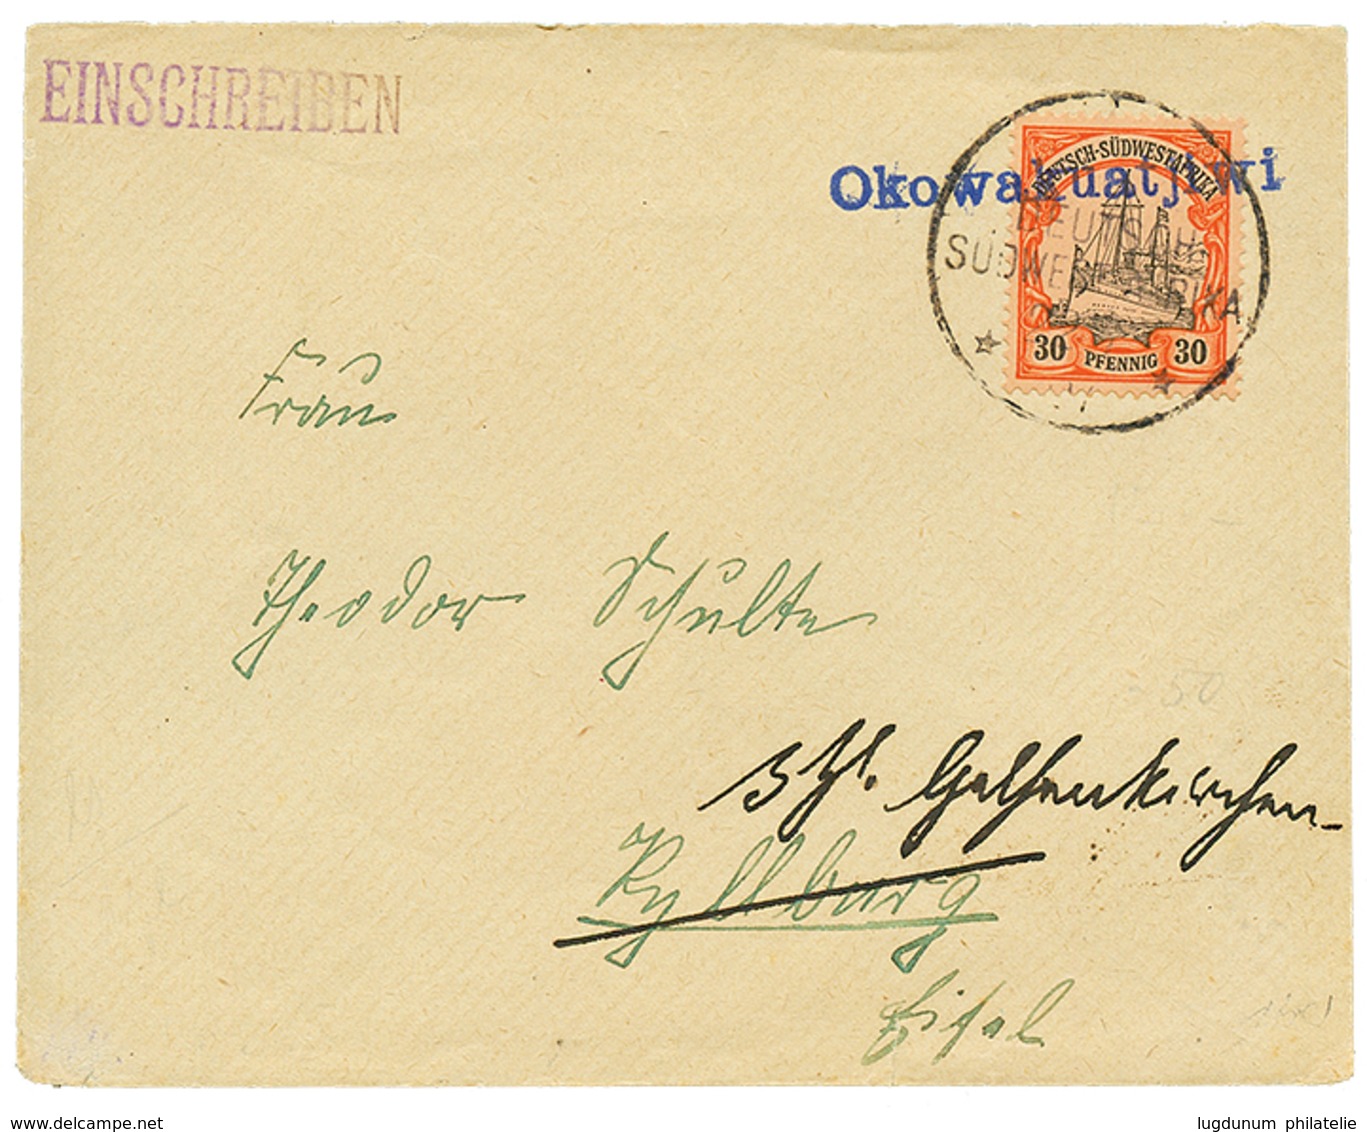 1081 30pf Canc. Blue OKOWAKUATJIWI On REGISTERED Envelope To GERMANY. Superb. - Deutsch-Südwestafrika